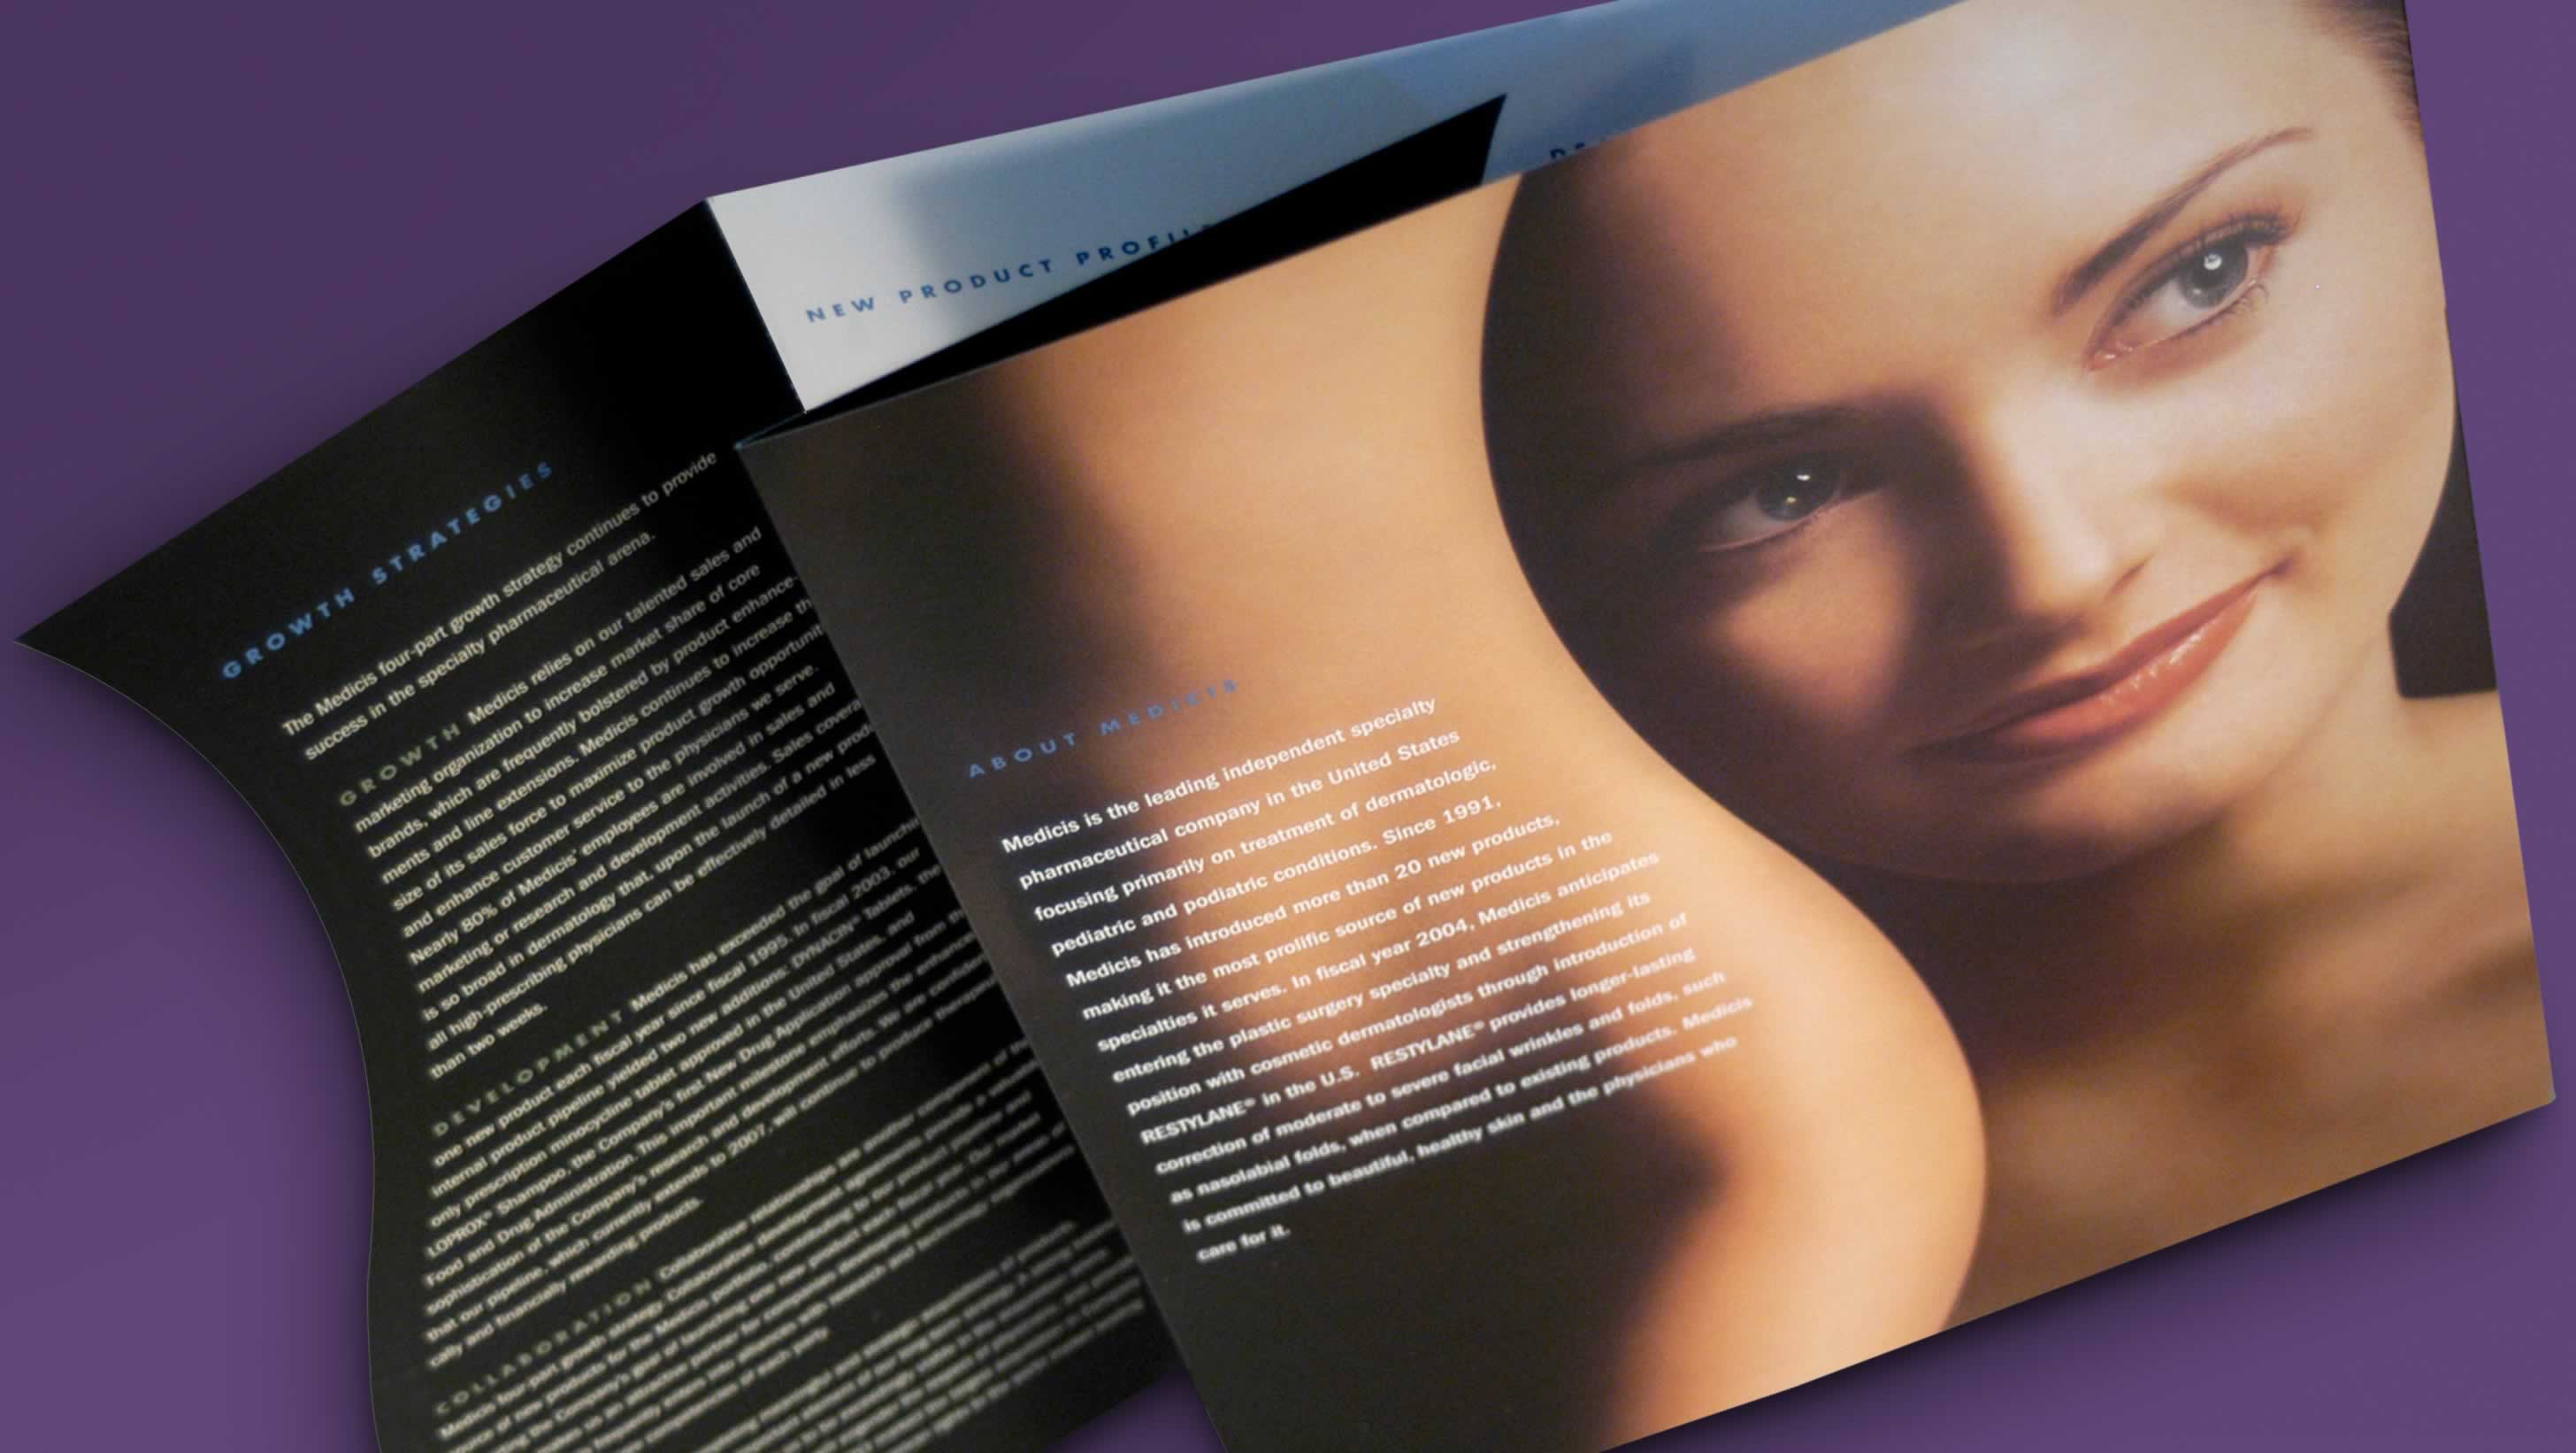 Skincare Industry Annual Report Design